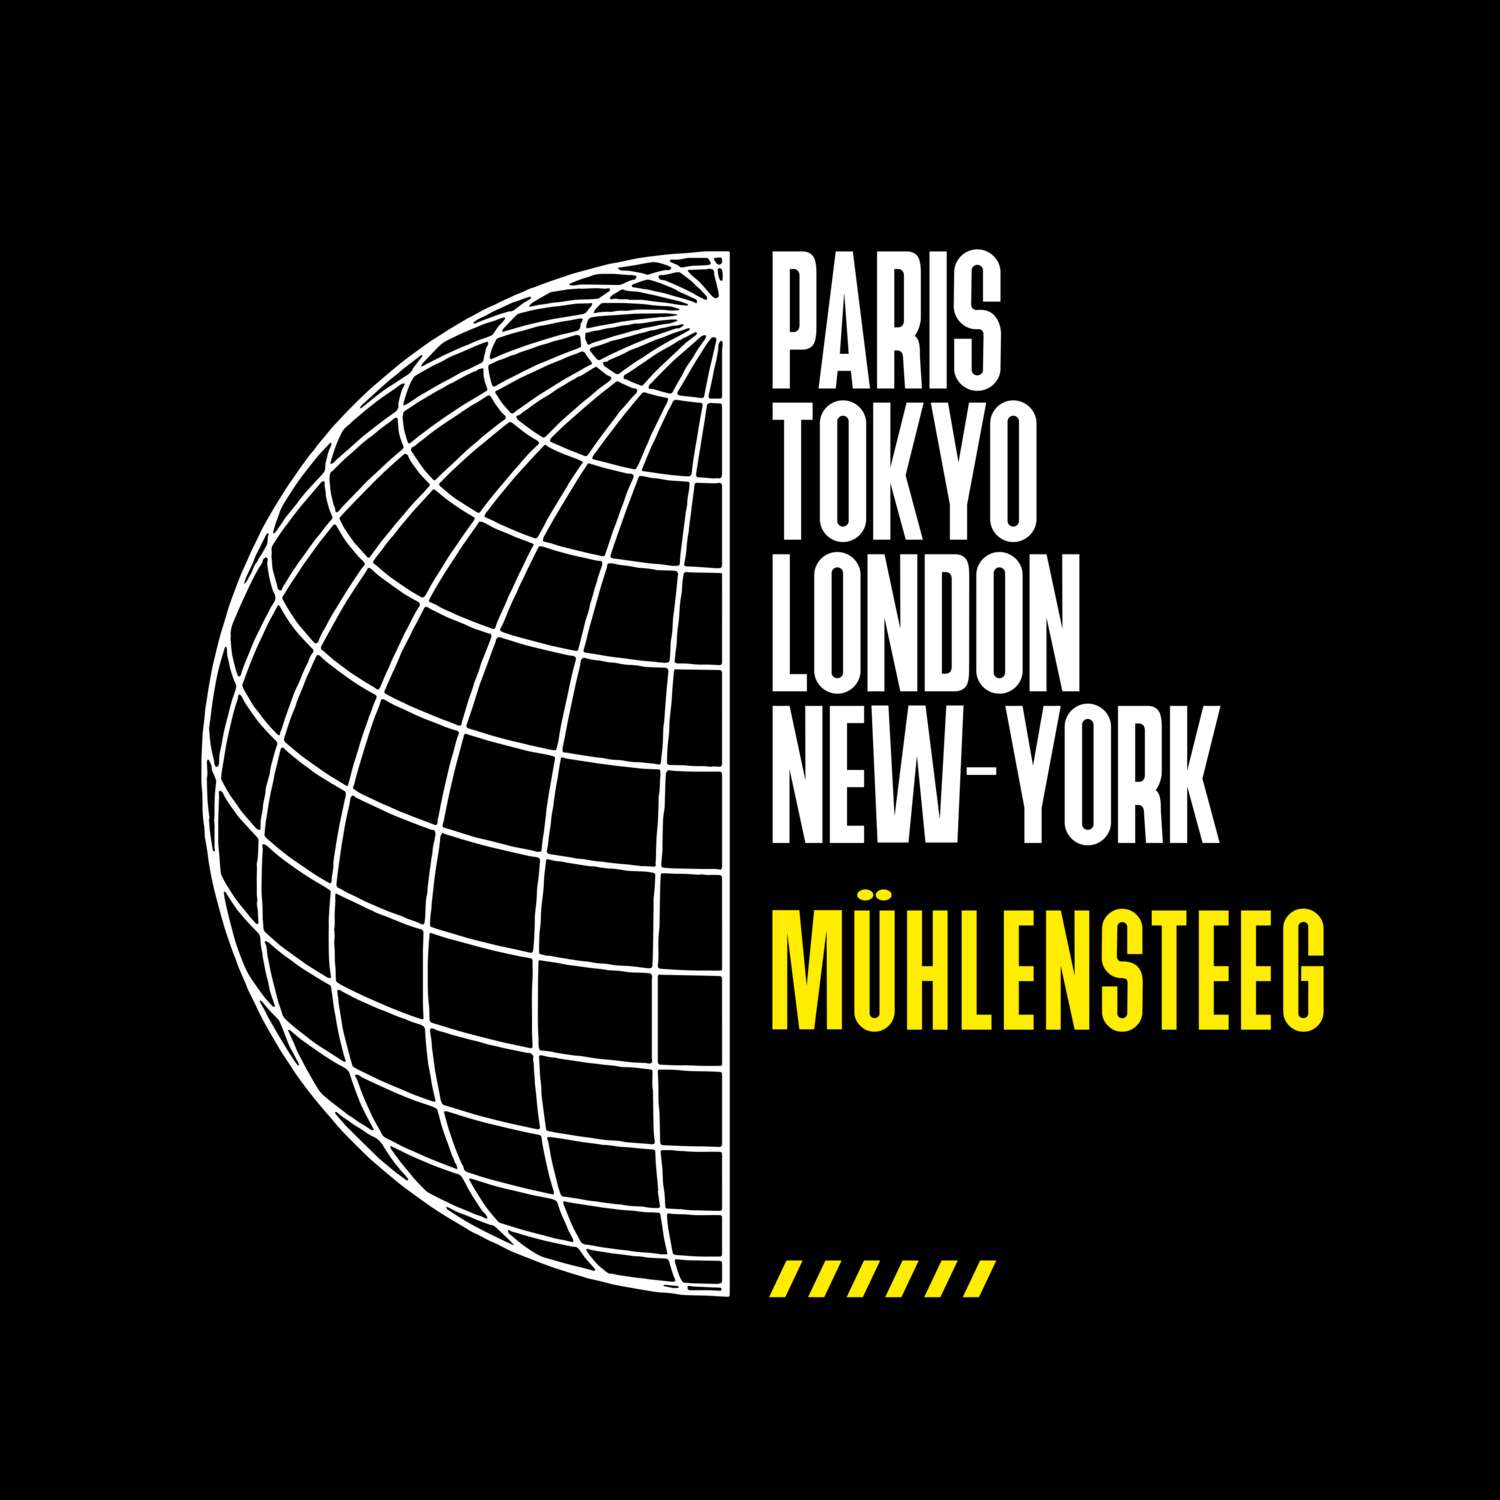 Mühlensteeg T-Shirt »Paris Tokyo London«